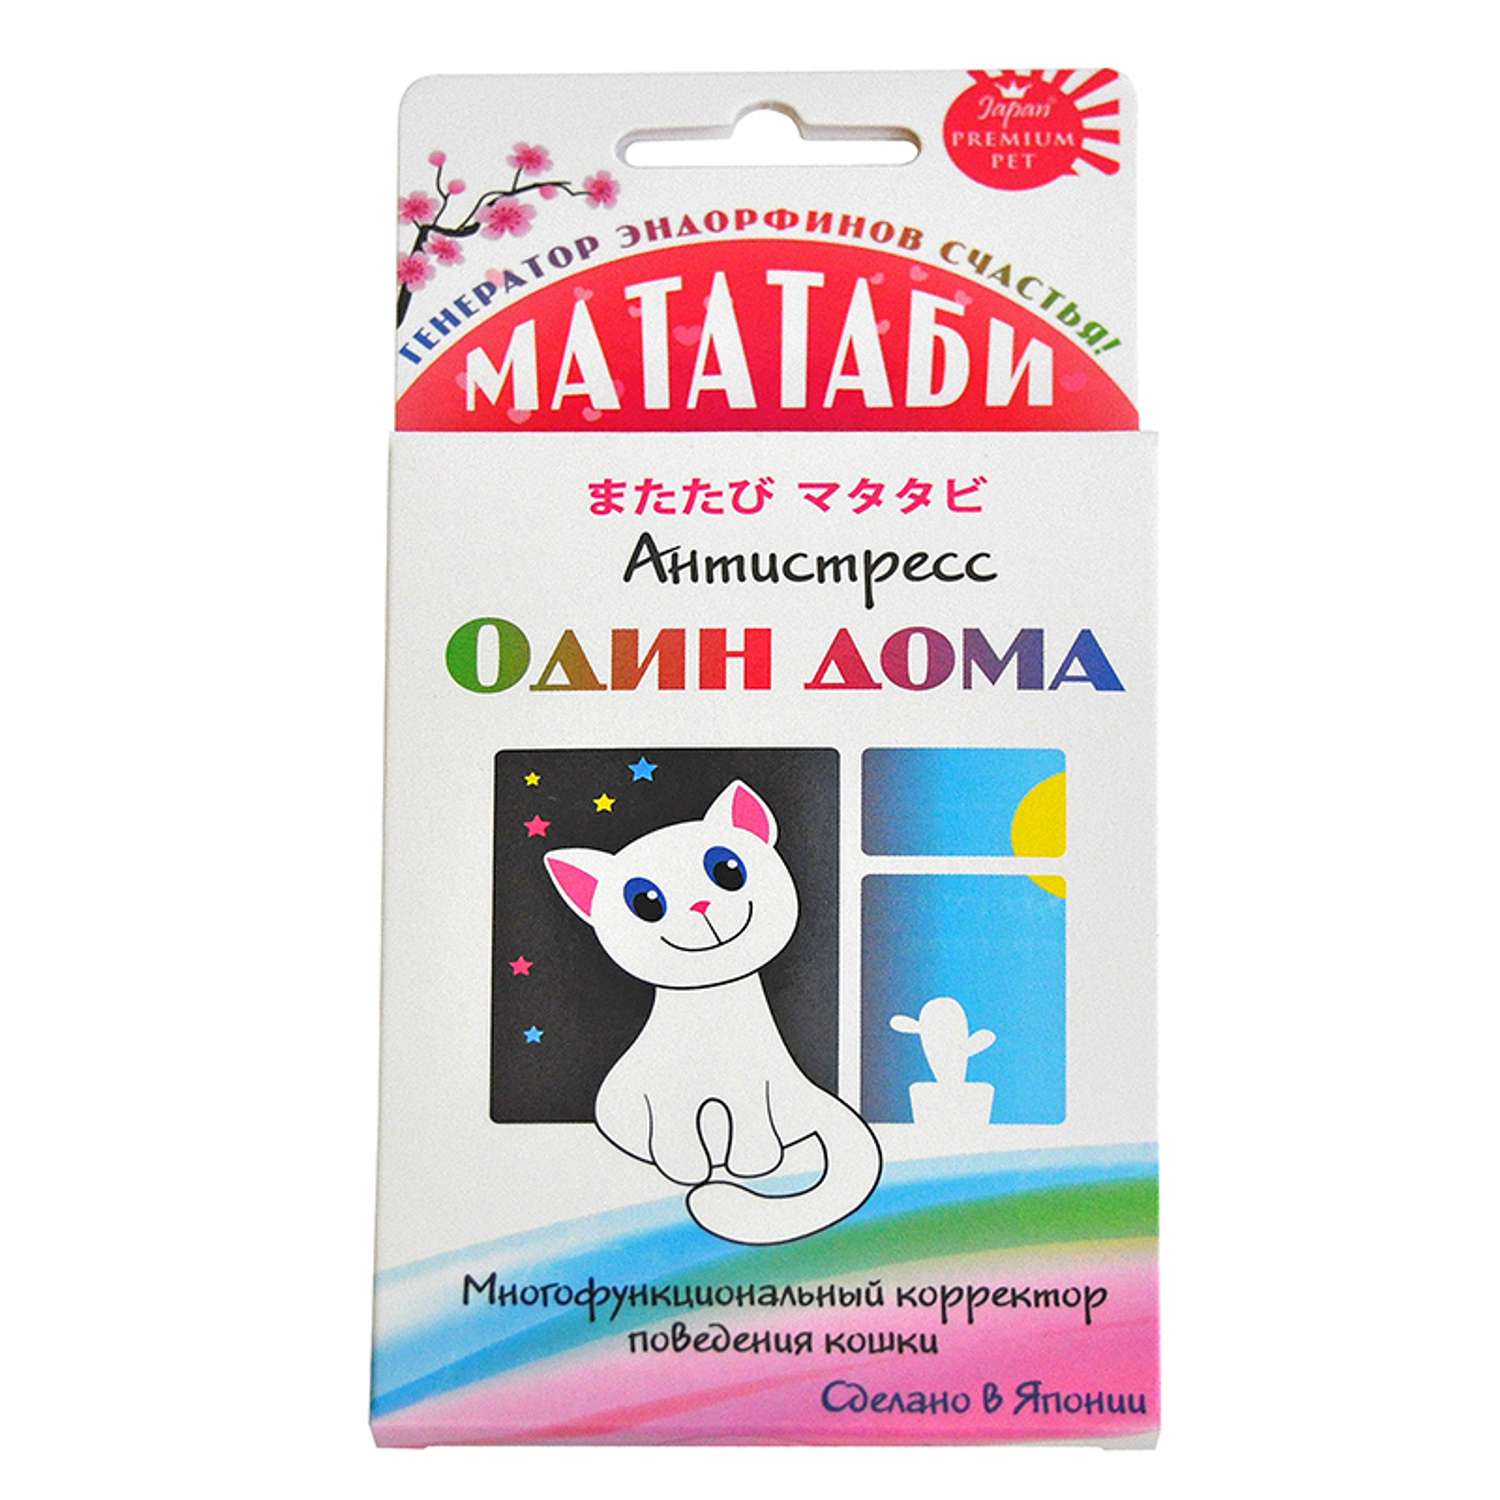 Пищевая добавка для кошек Itosui Мататаби Один дома для снятия стресса - фото 1